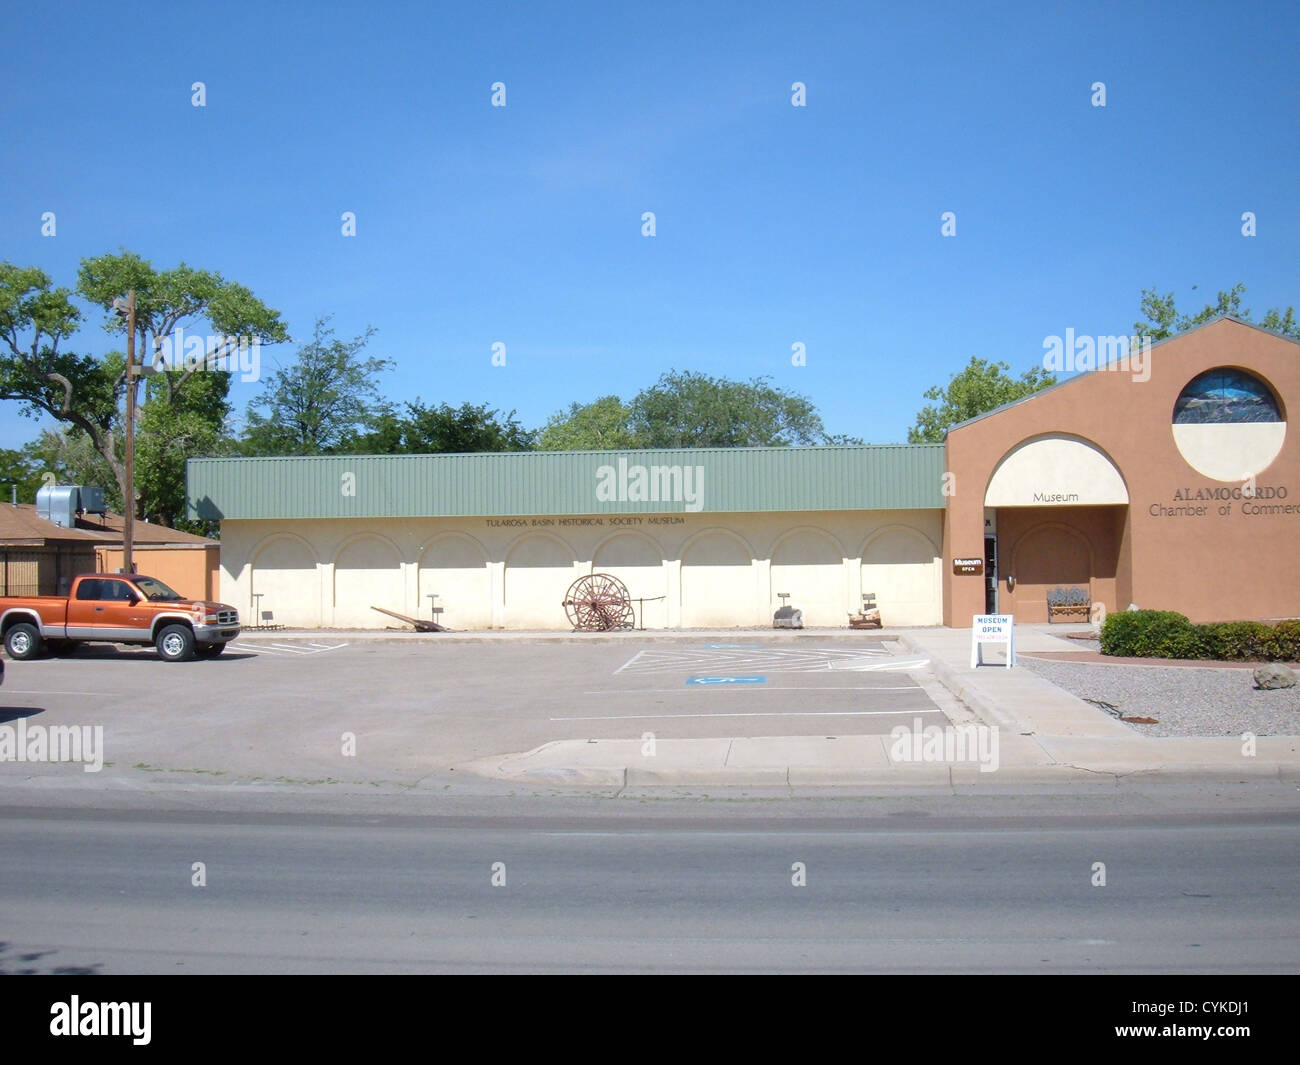 Alamogordo Museum of History, locate at 1301 N. White Sands Blvd. in Alamogordo, New Mexico Stock Photo